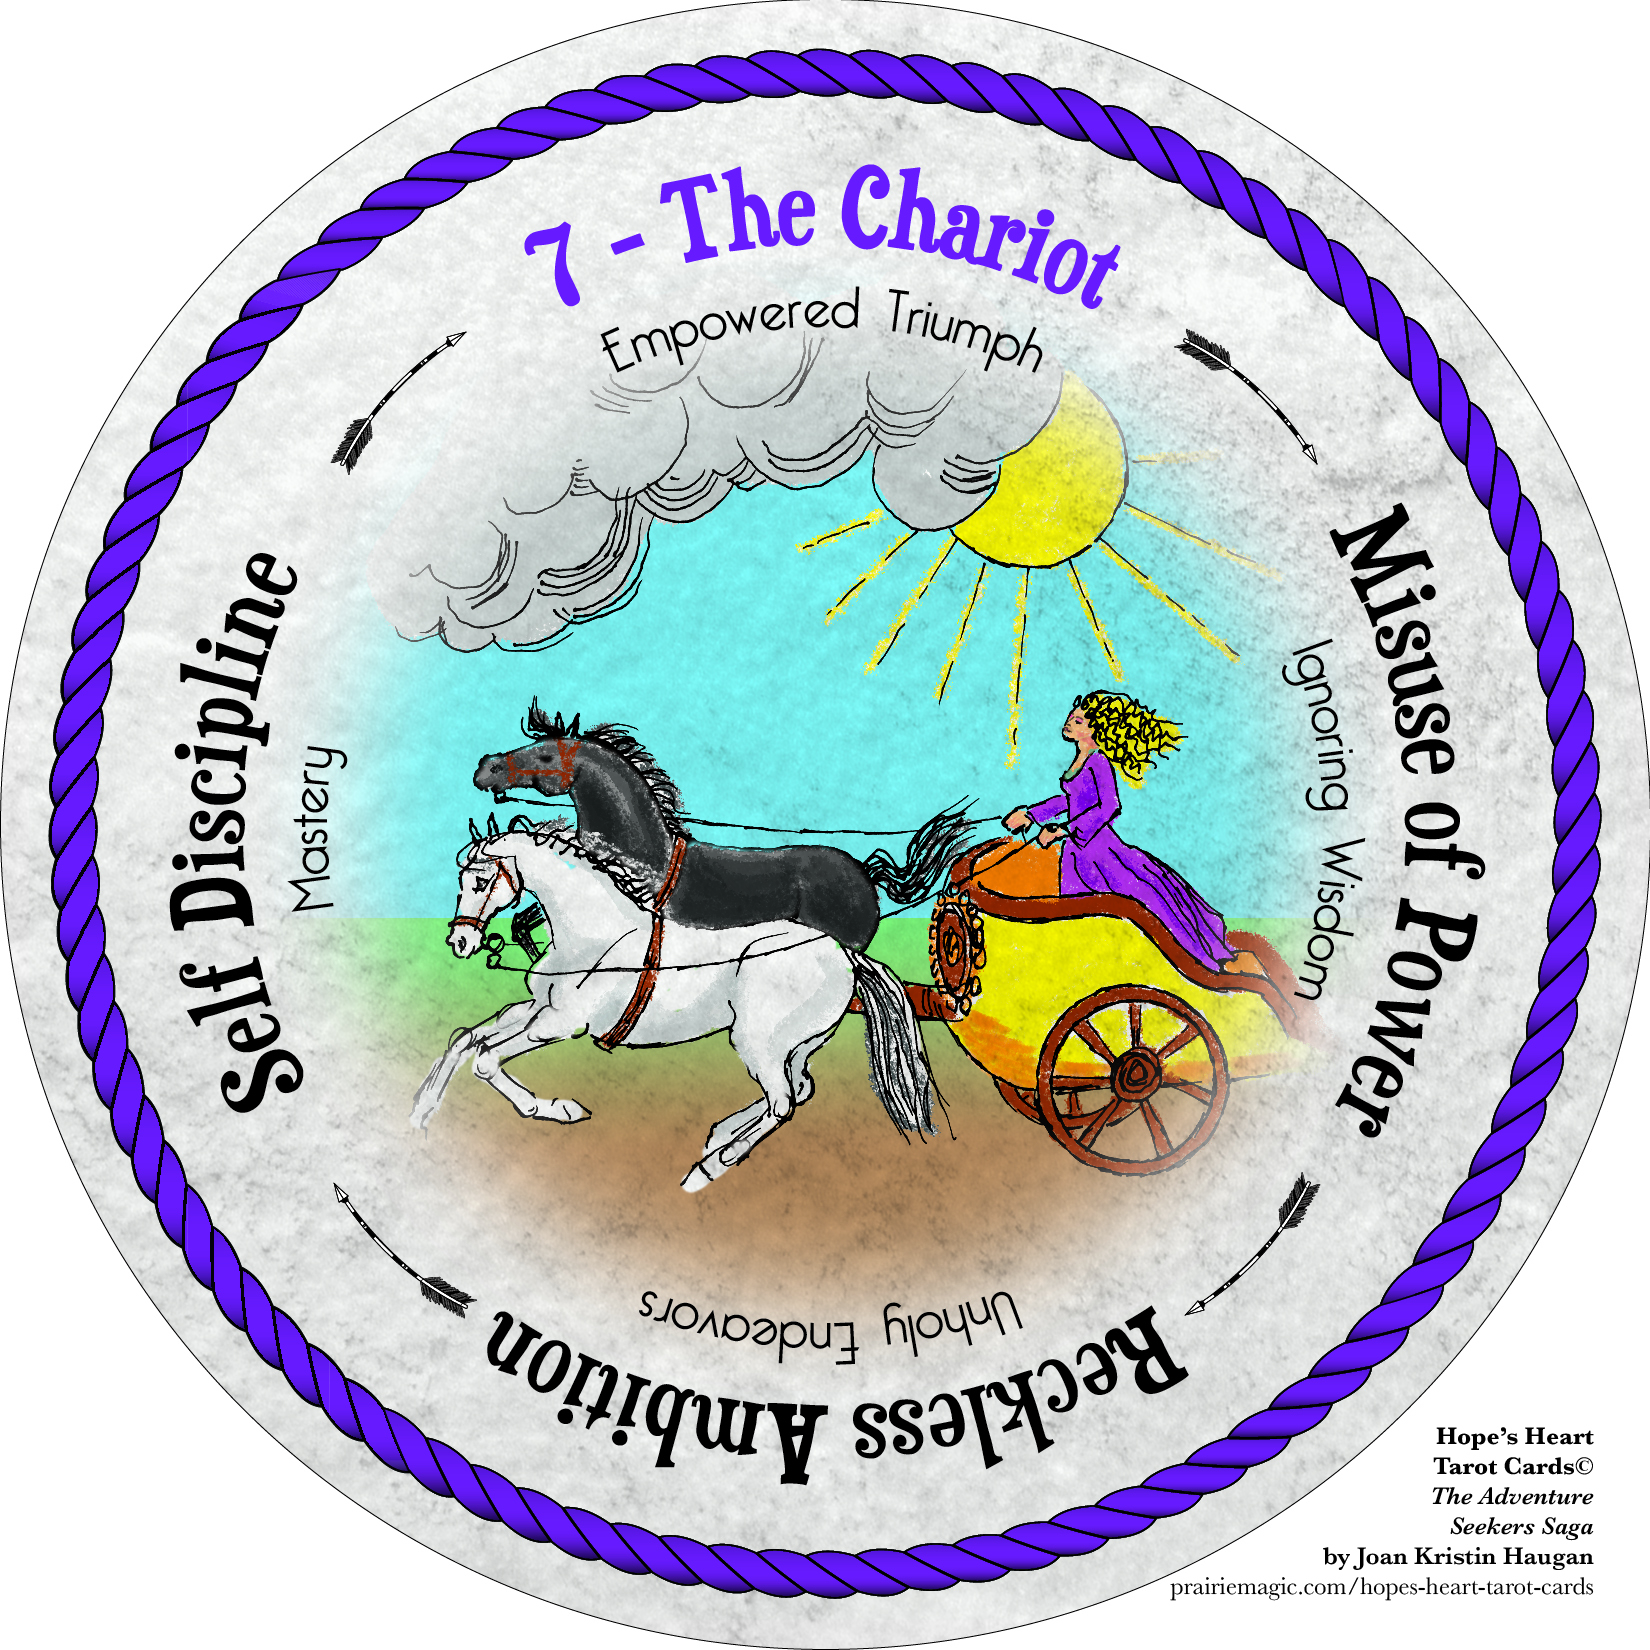 7-the-chariot-hope-s-heart-tarot-cards-.jpg